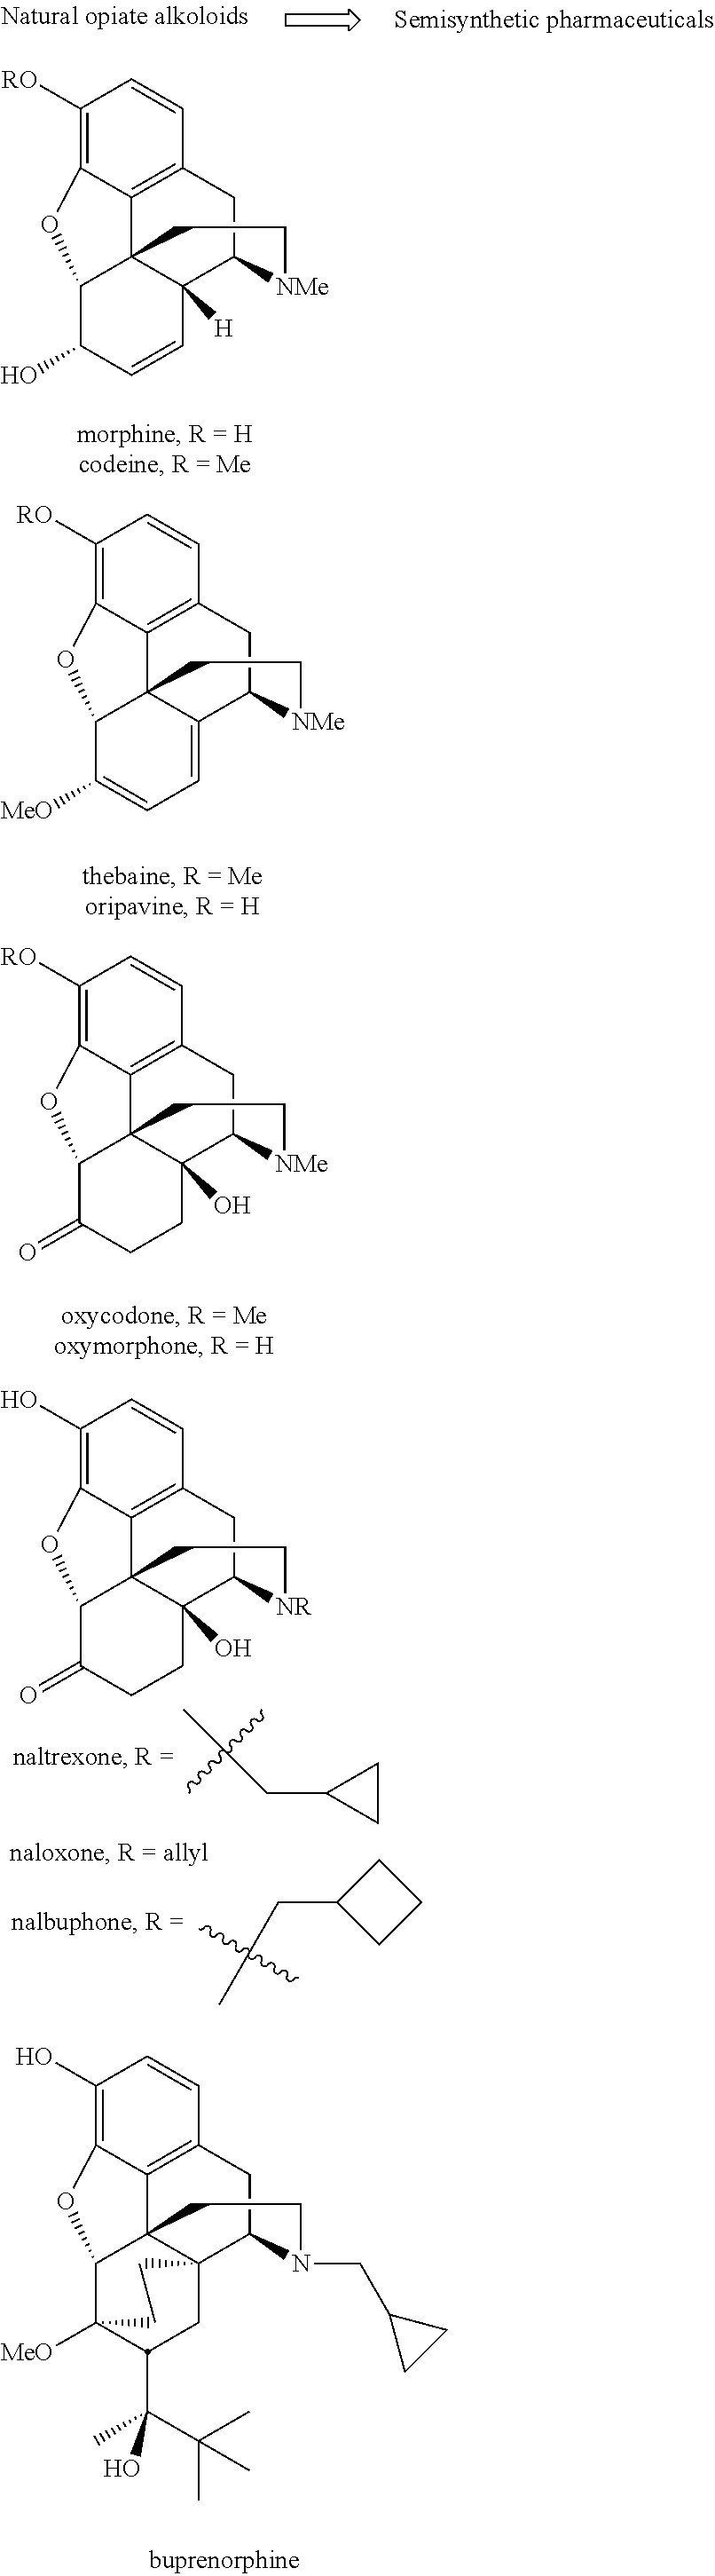 Methods for one-pot <i>N</i>-demethylation/<i>N</i>-functionalization of morphine and tropane alkaloids